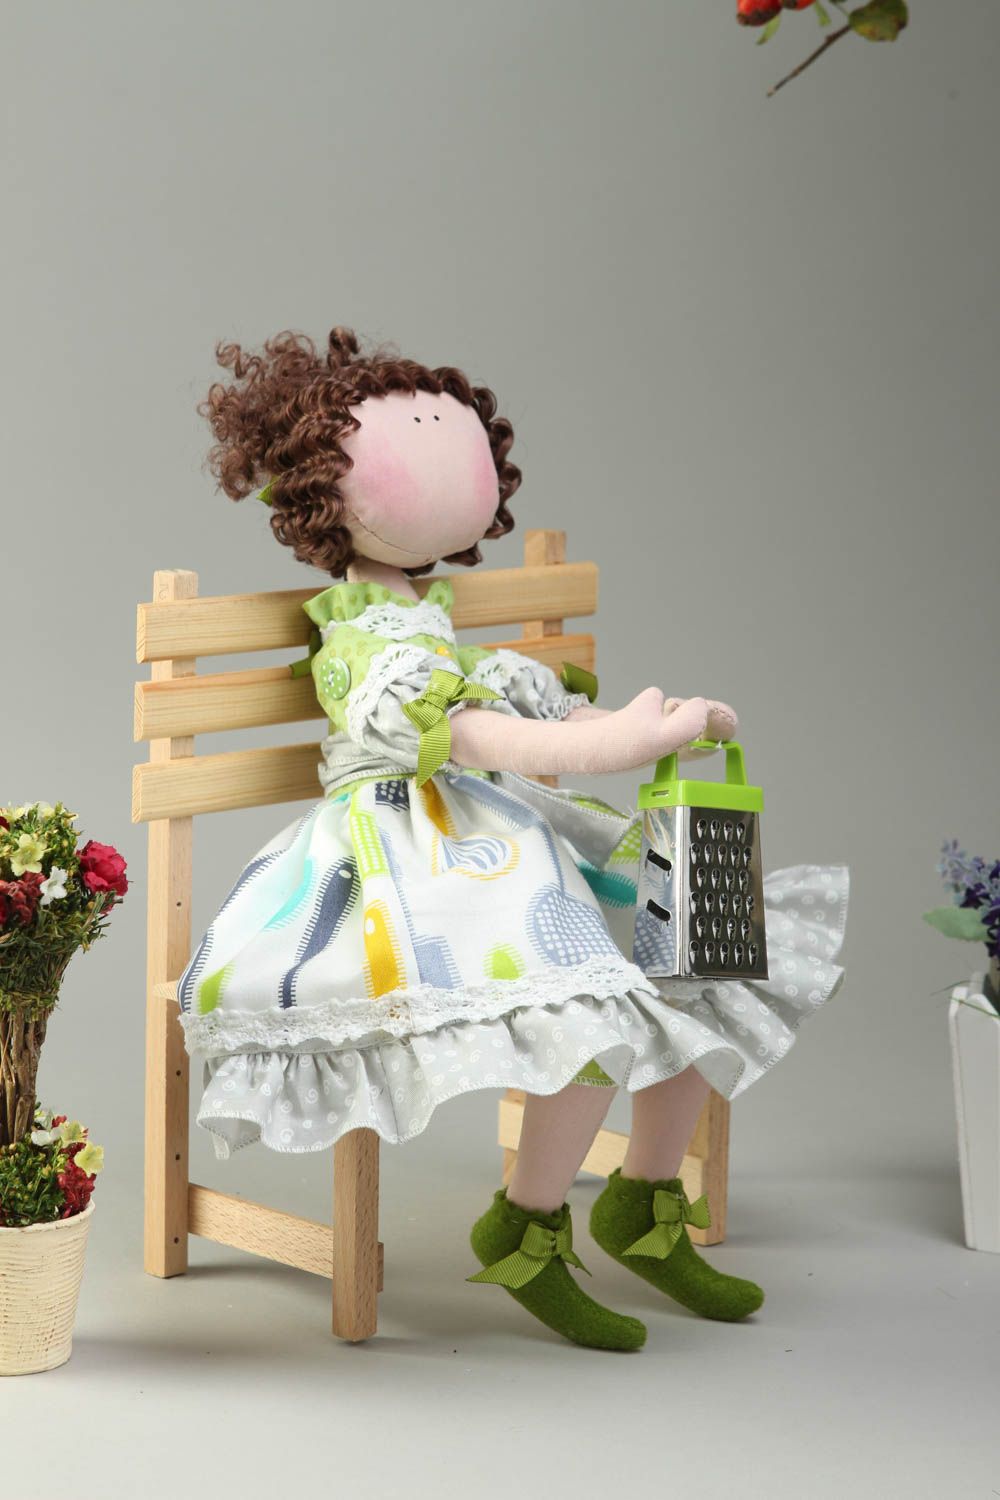 Beautiful handmadr rag doll decorative soft toy gift ideas decorative use only photo 1